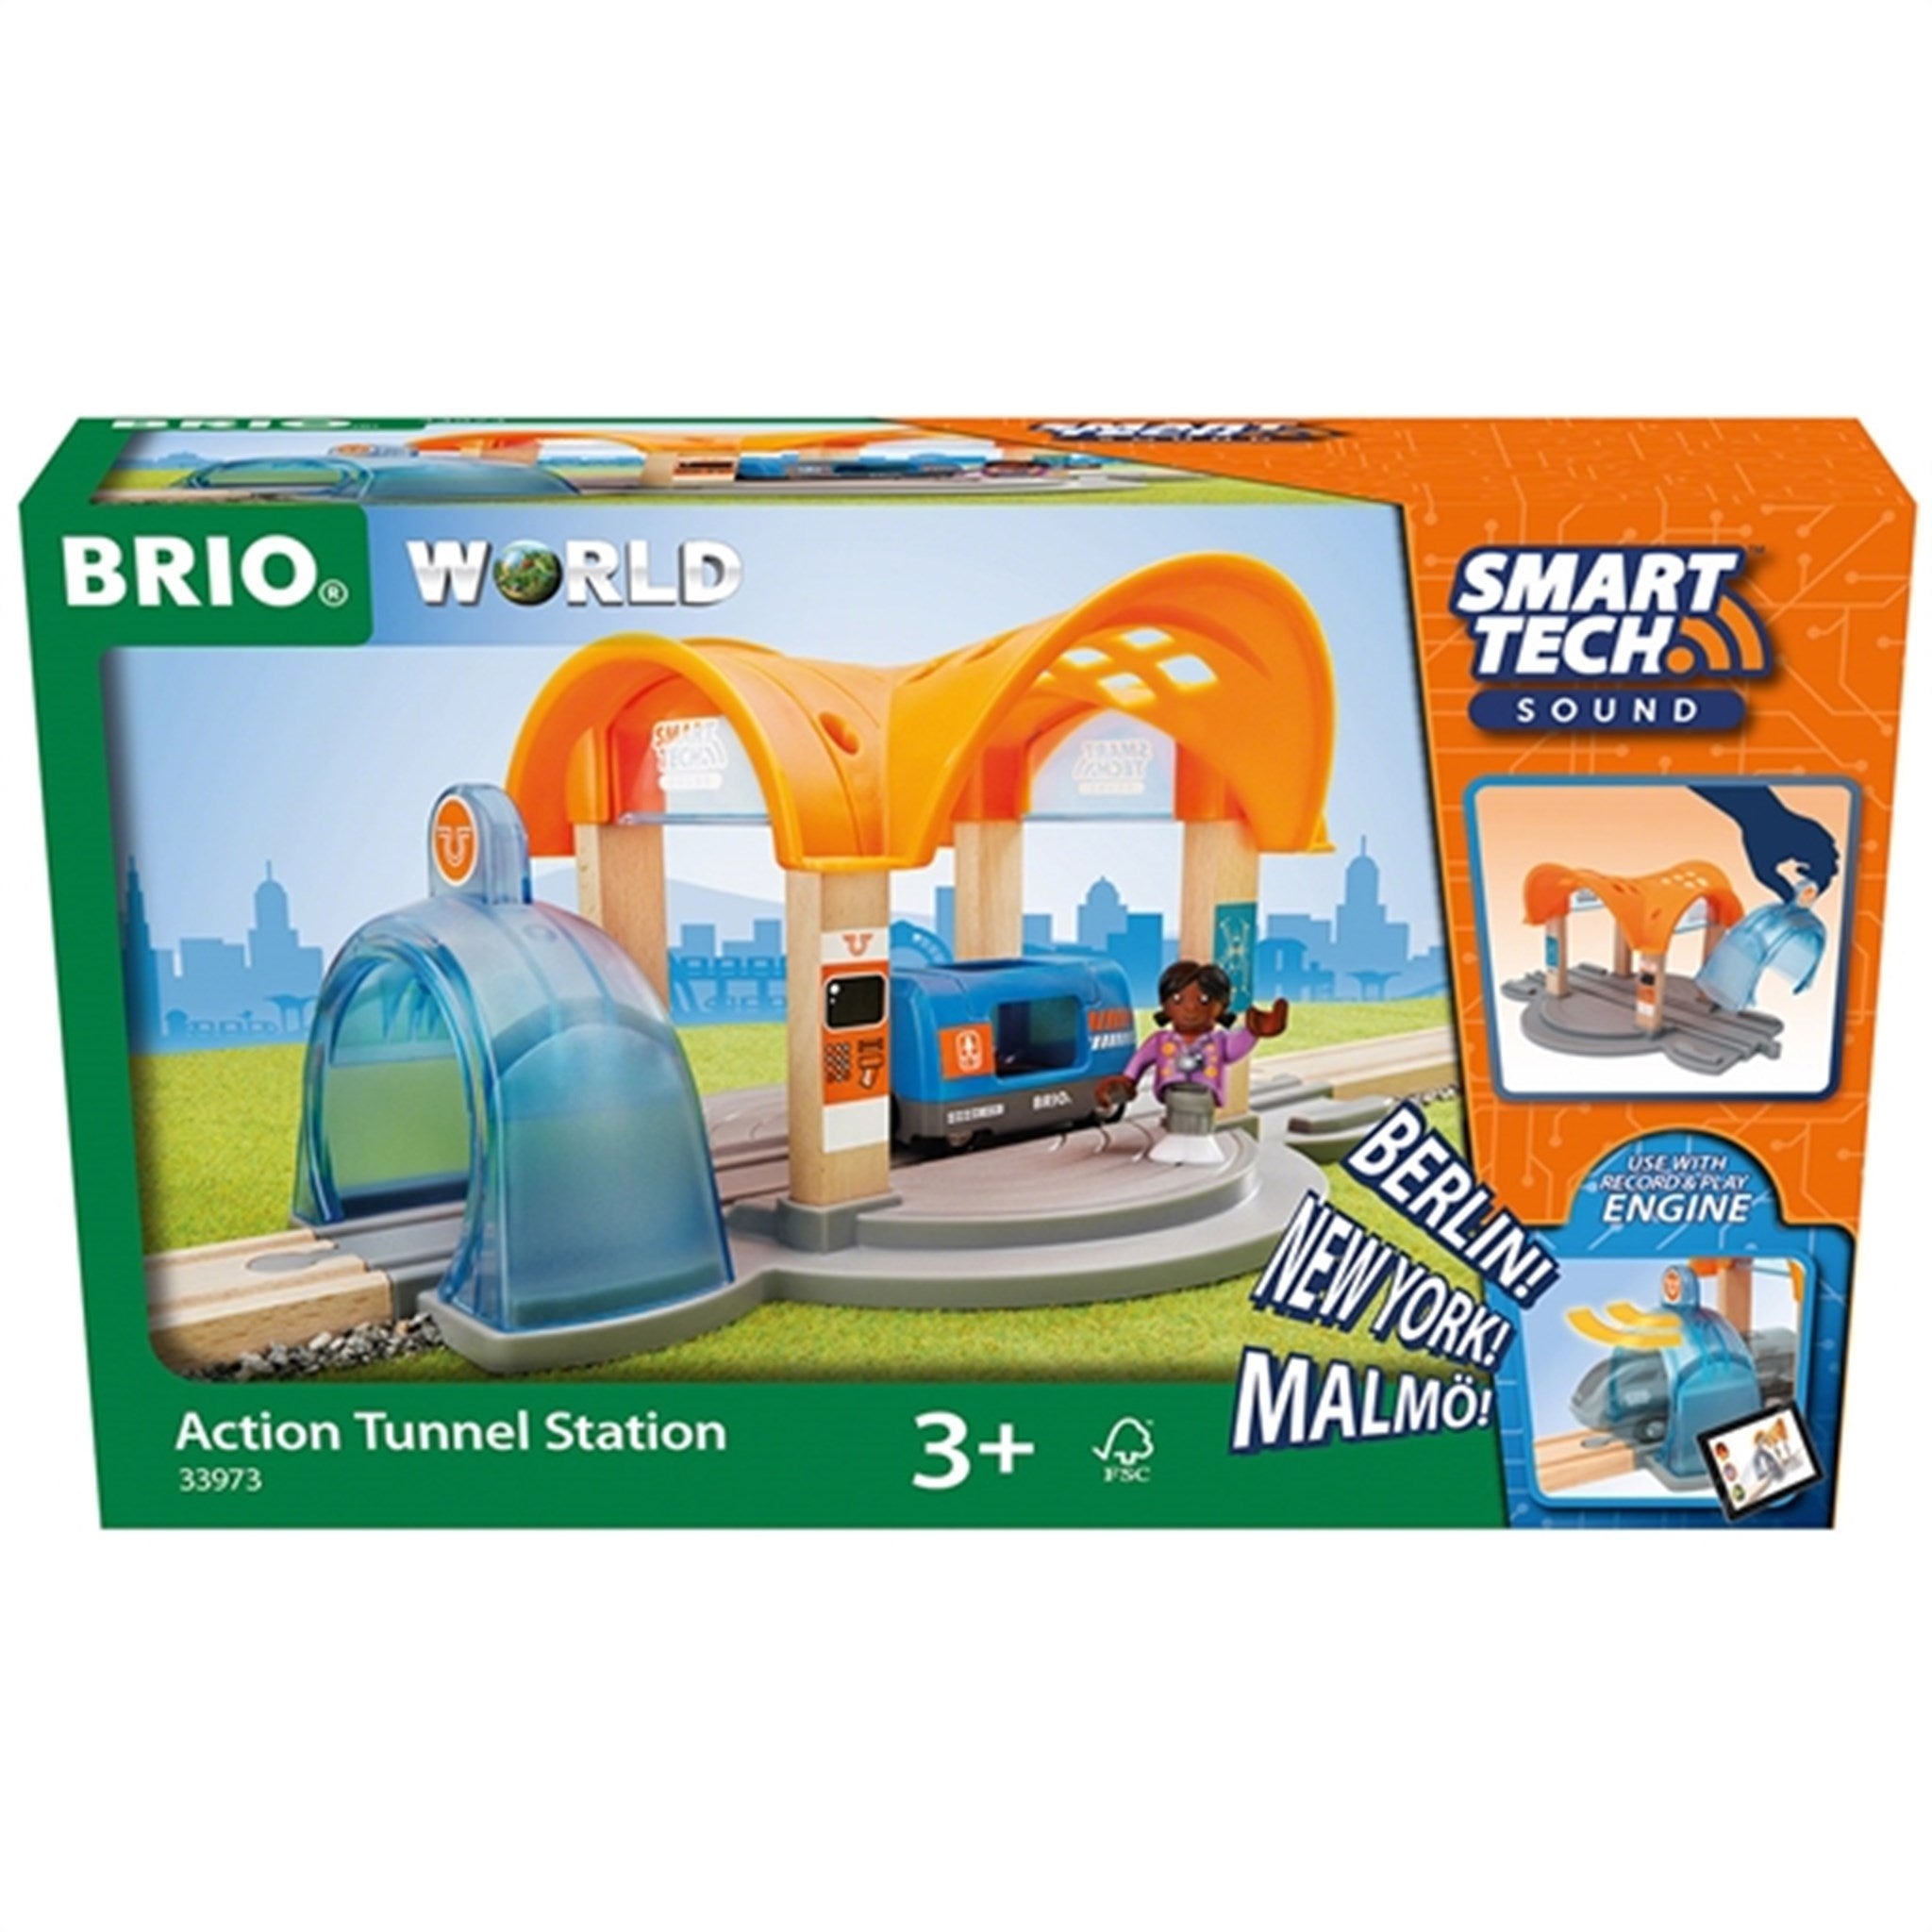 BRIO® Smart Tech Sound Action Tunnel Station 2